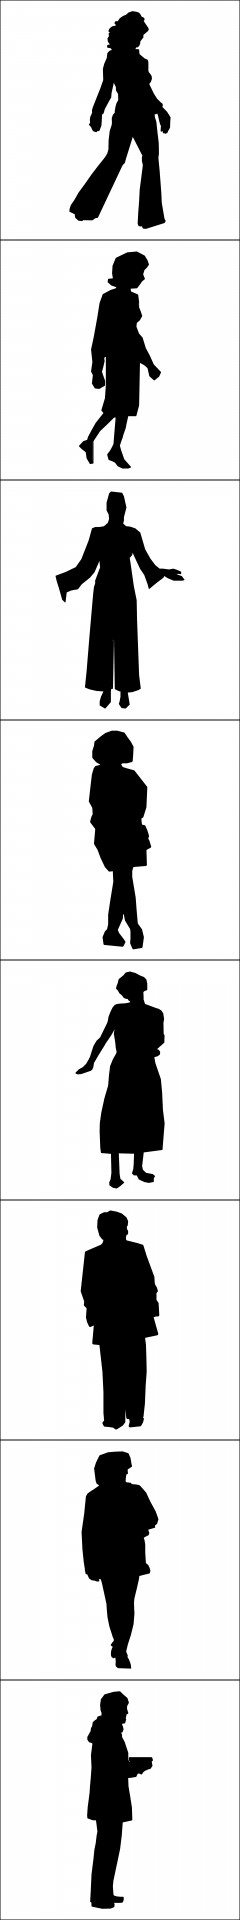 Women Silhouettes